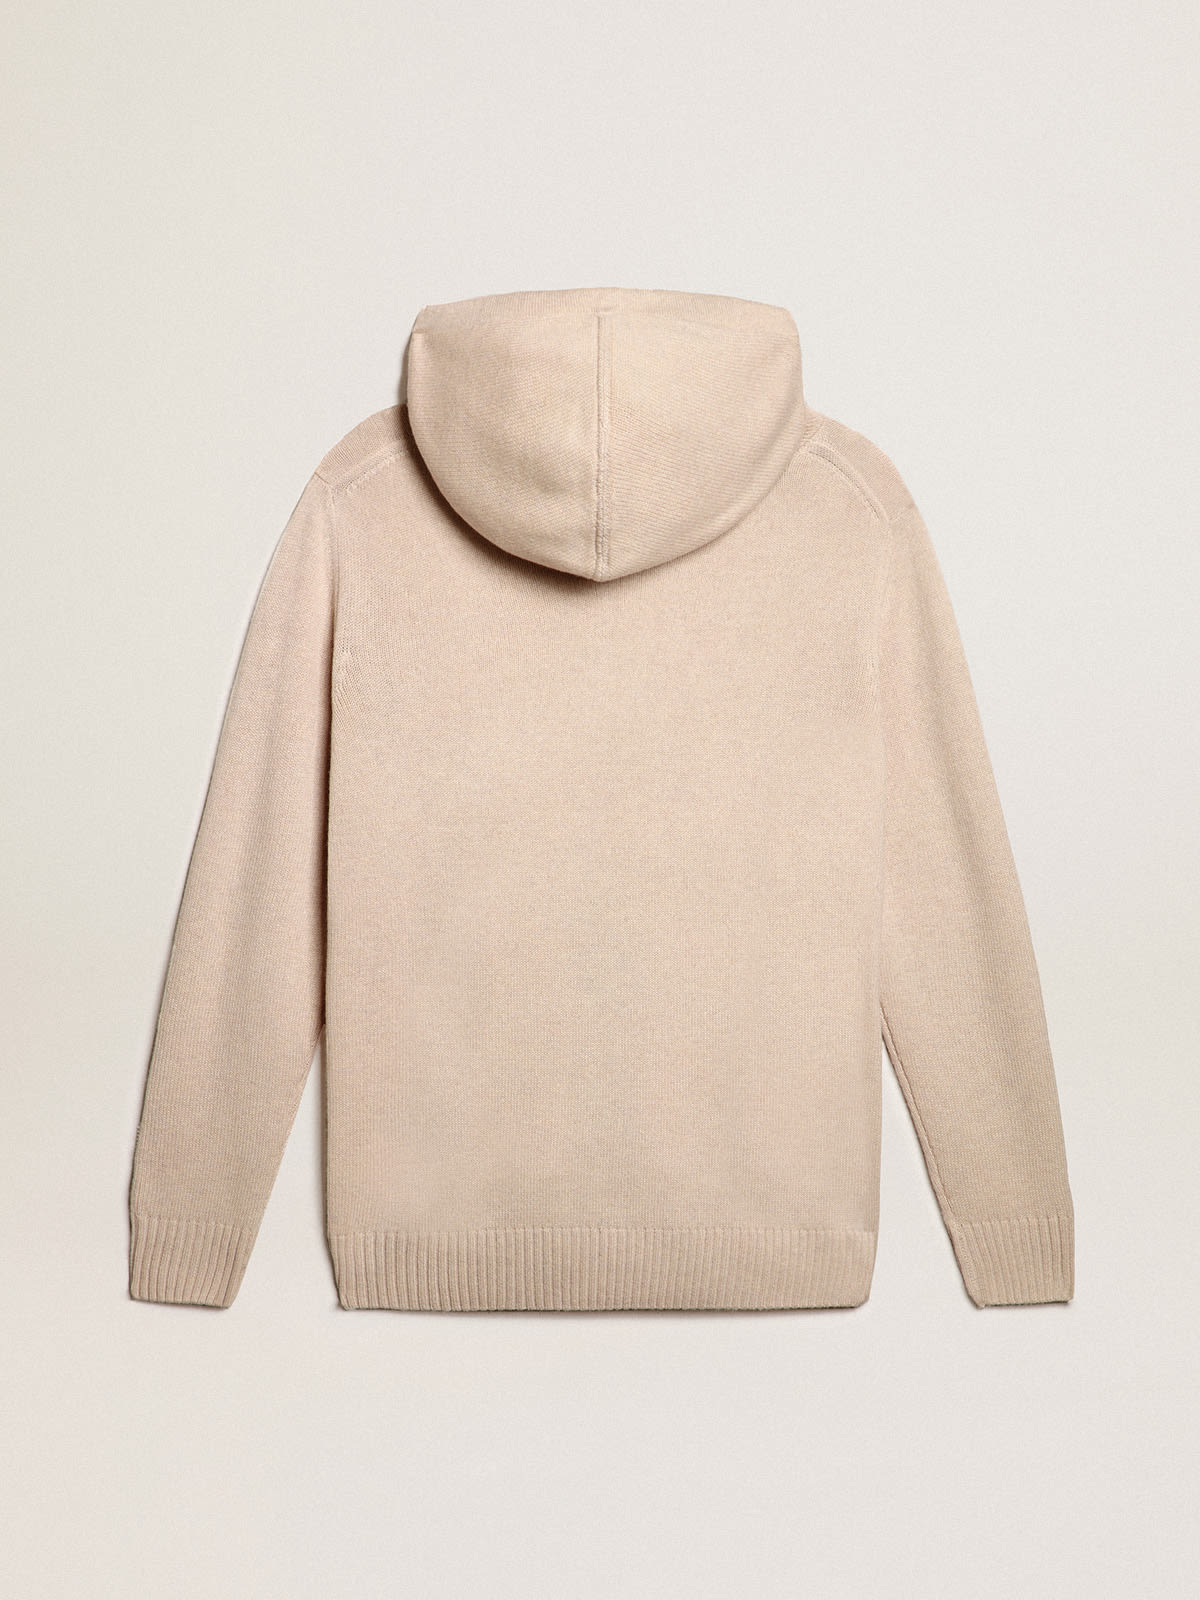 Golden Goose - Men’s white cashmere blend sweatshirt with hood in 